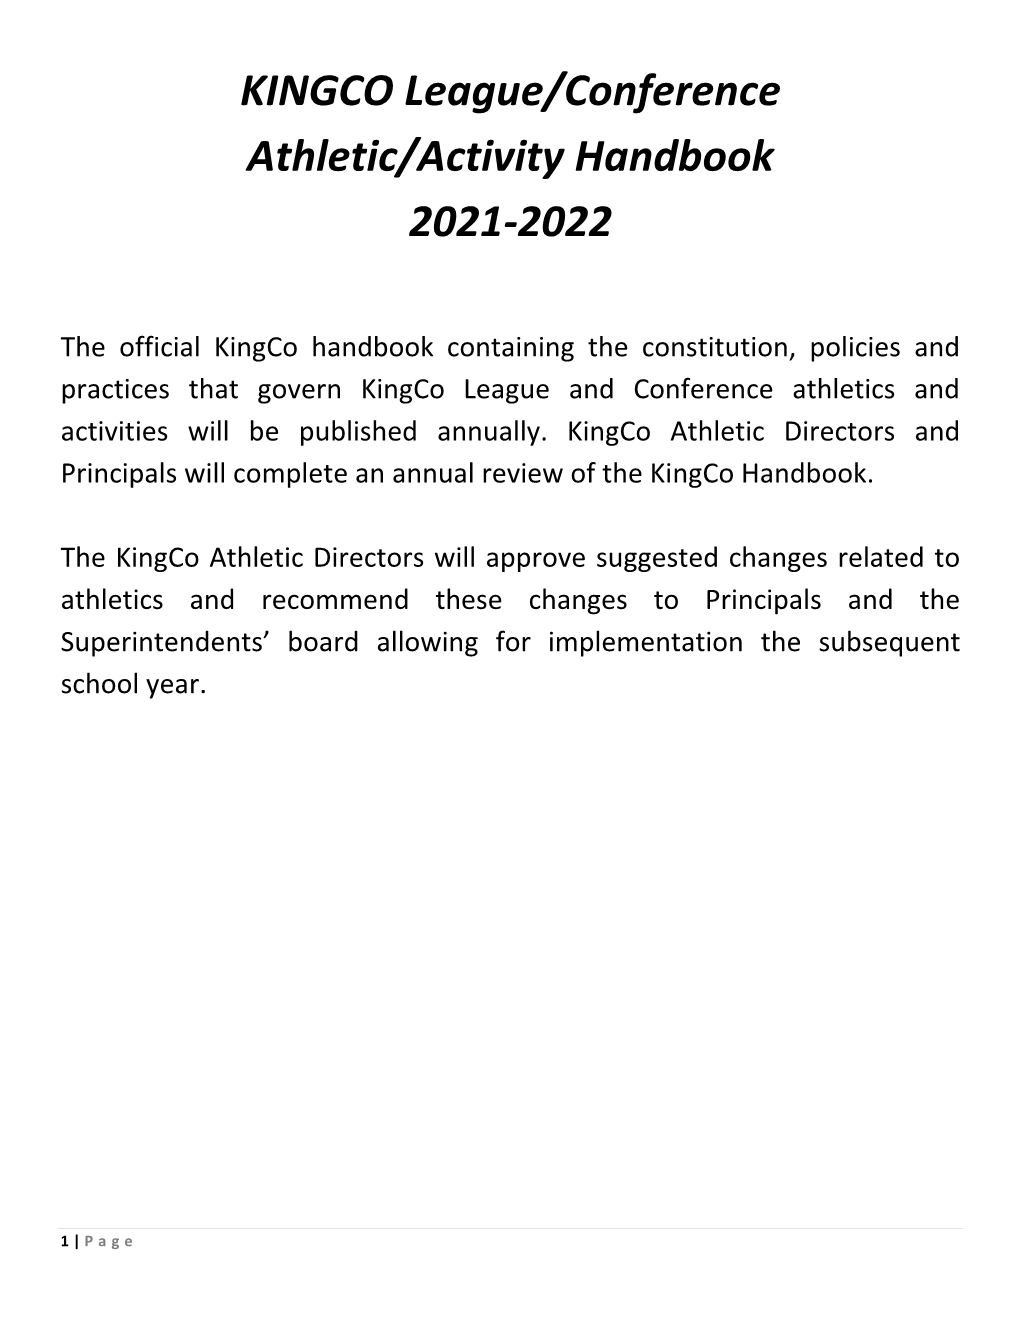 KINGCO League/Conference Athletic/Activity Handbook 2021-2022